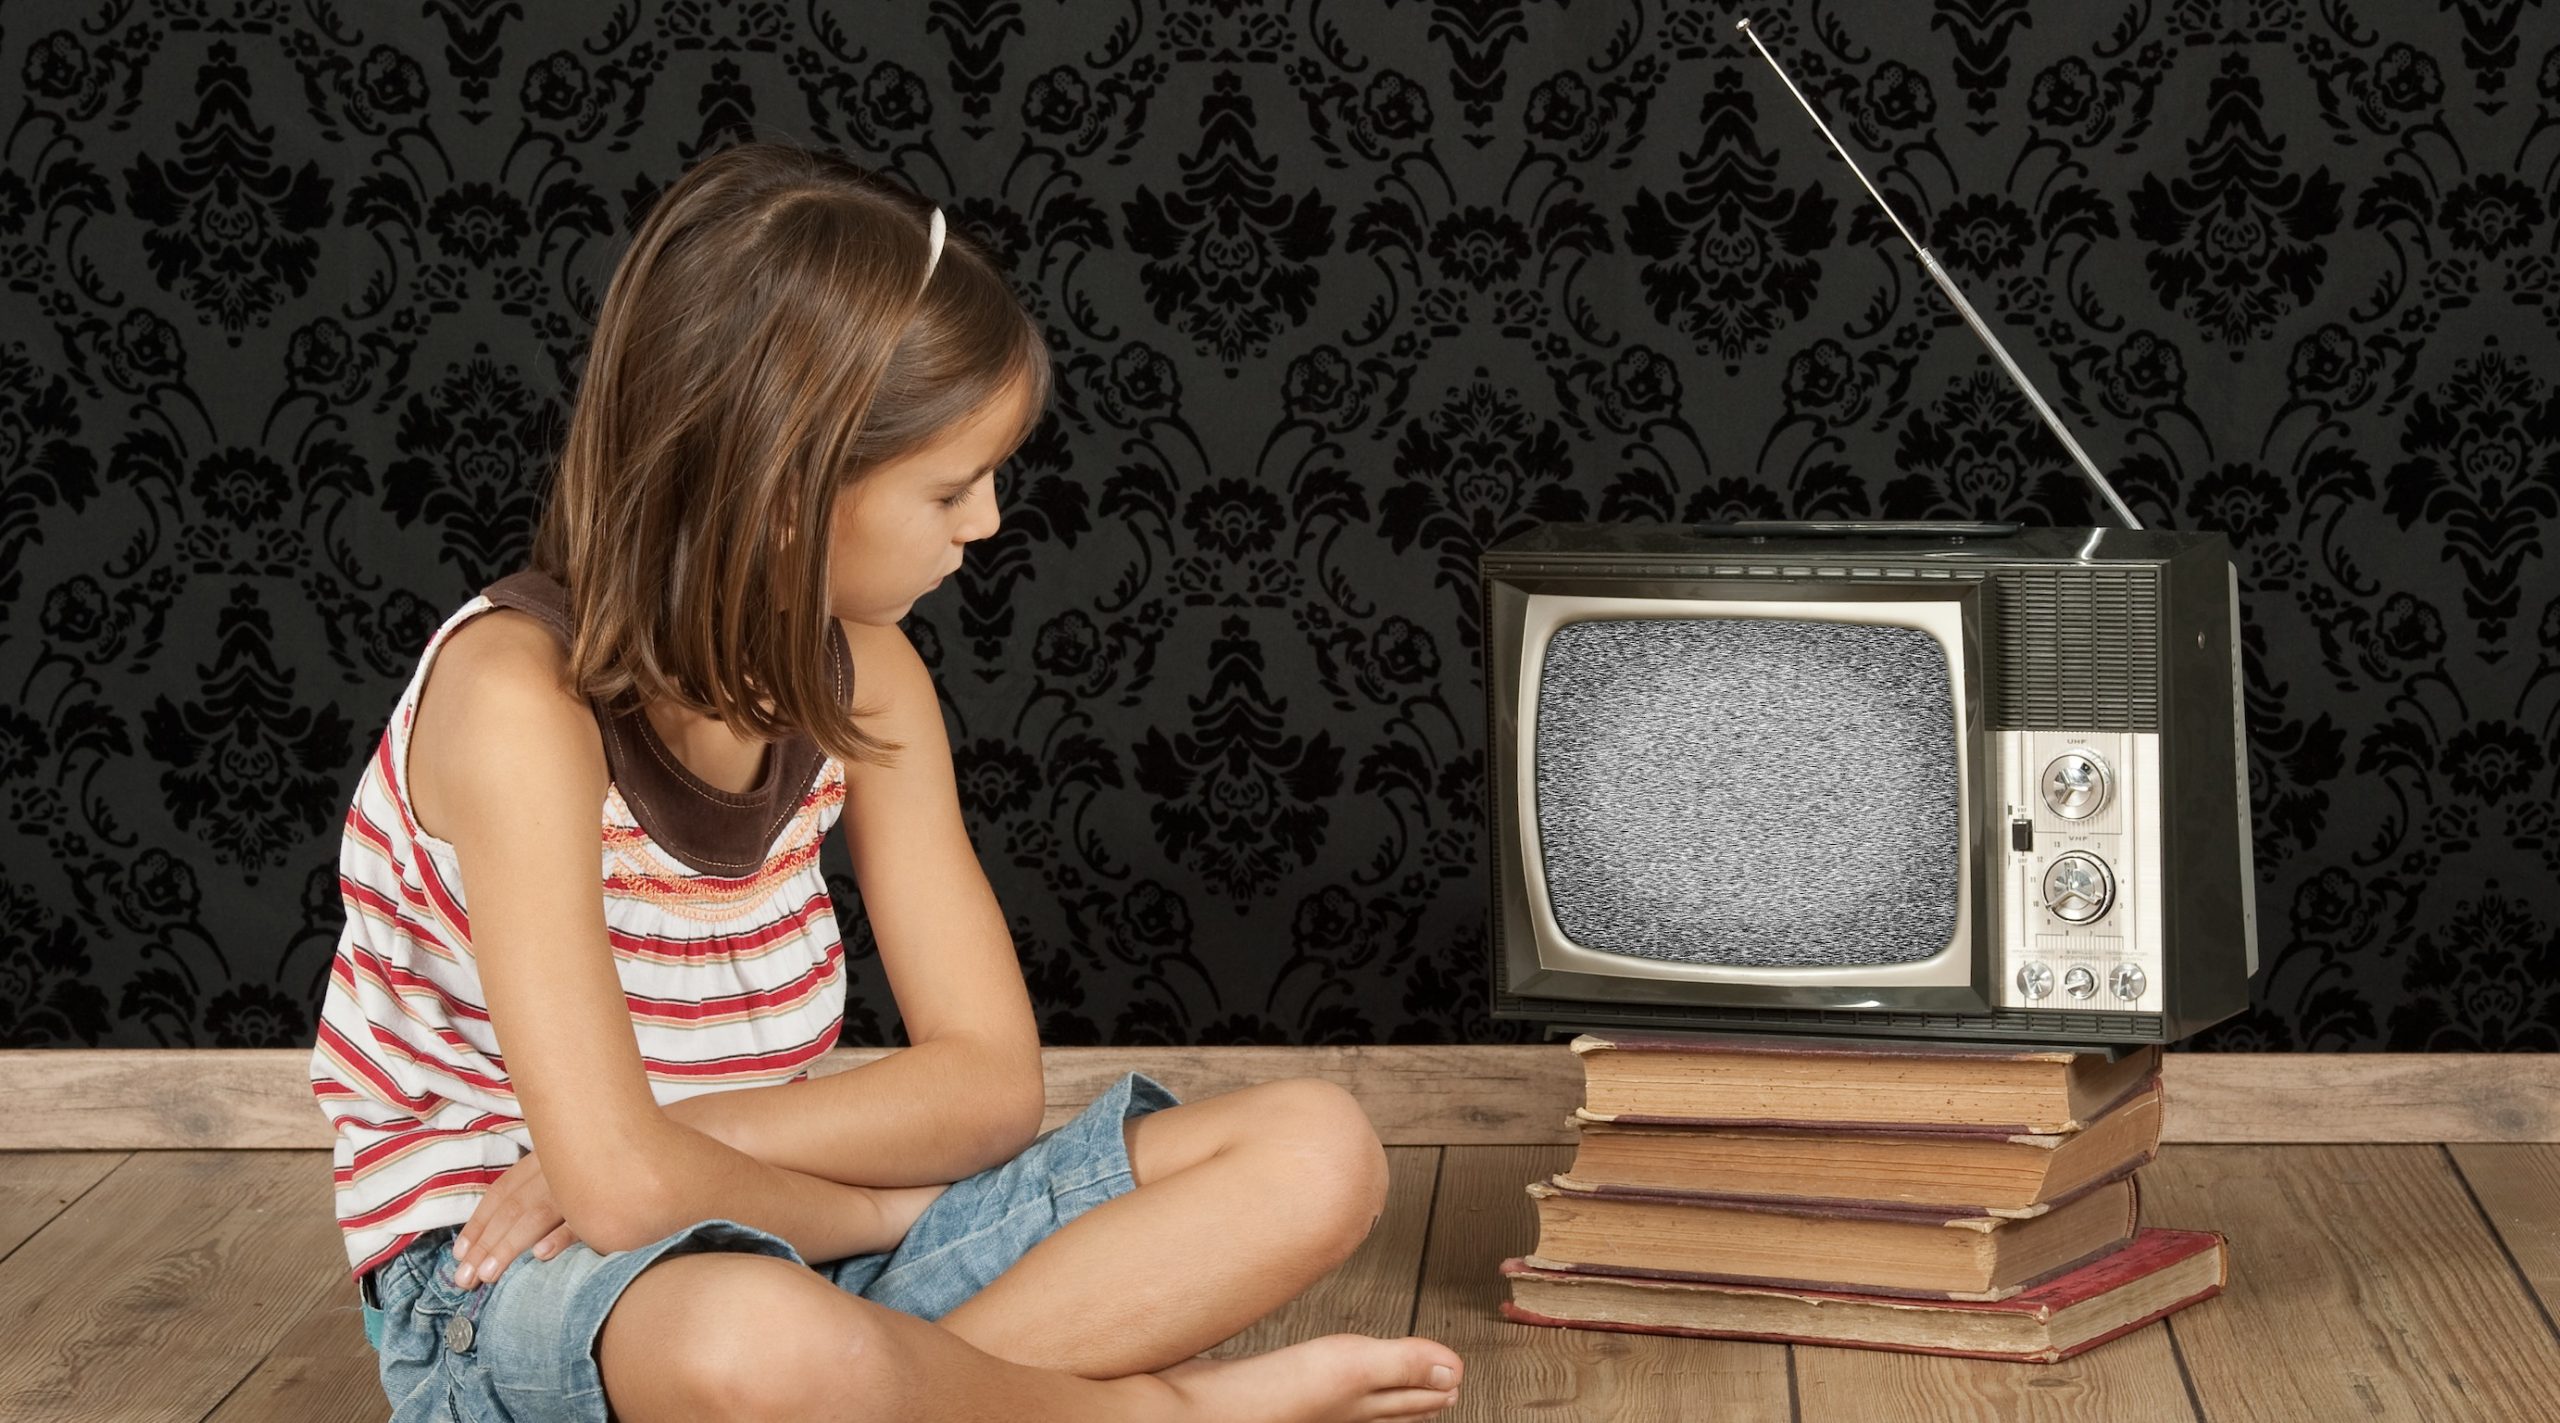 Телевизор читает видео. Девочка телевизор. Девочка перед телевизором. Фотосессия с телевизором. Фотосессия с телевизорами старыми.